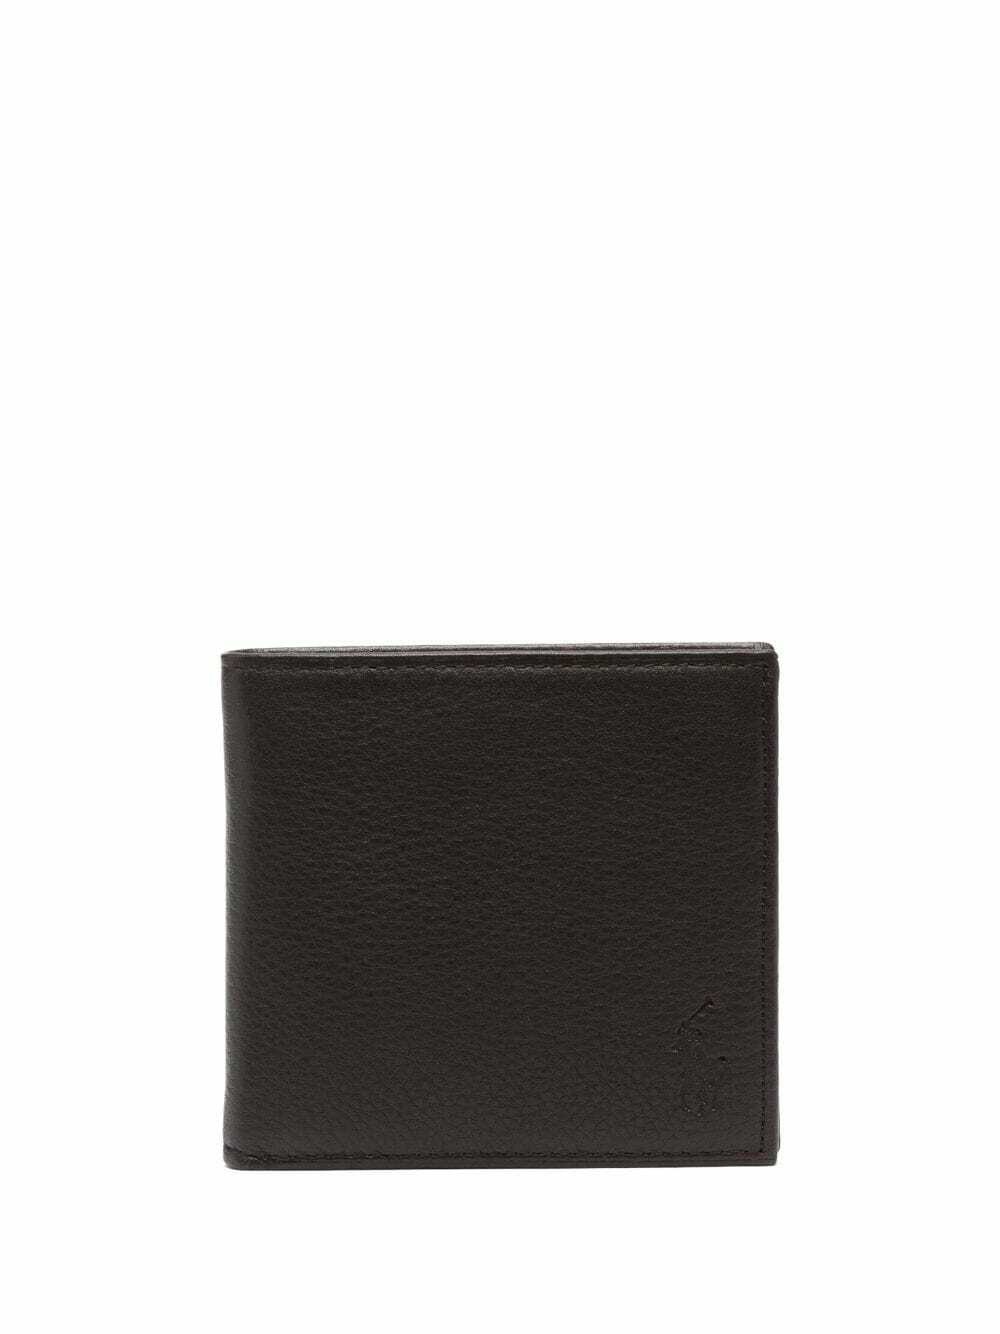 Photo: POLO RALPH LAUREN - Leather Wallet